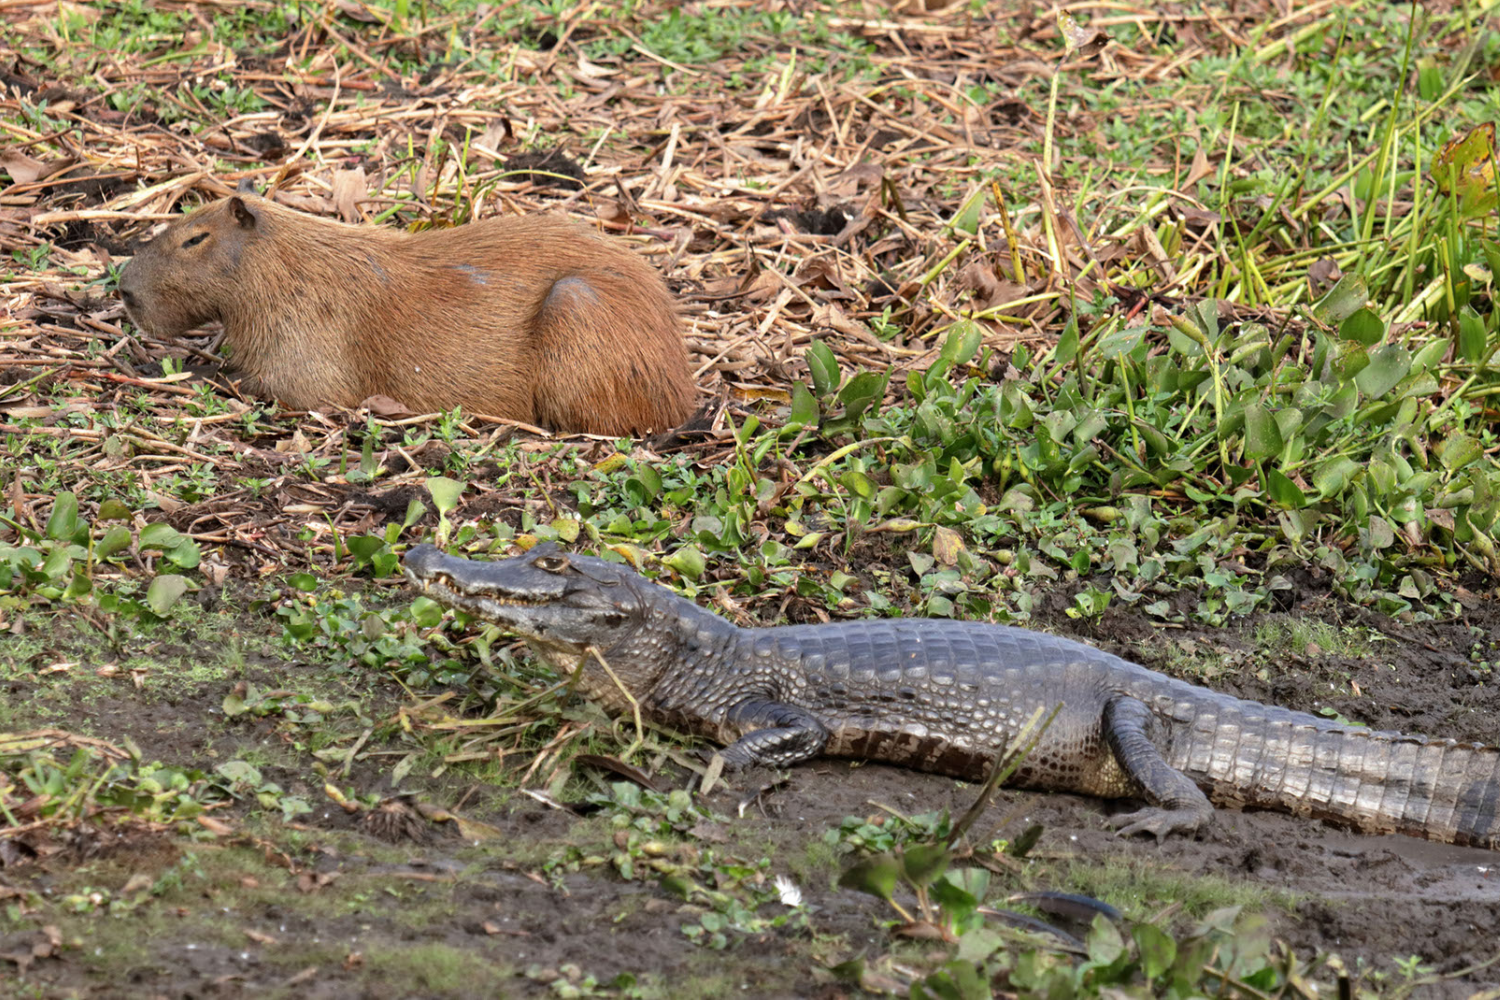 Can Crocodiles and Capybaras Coexist?